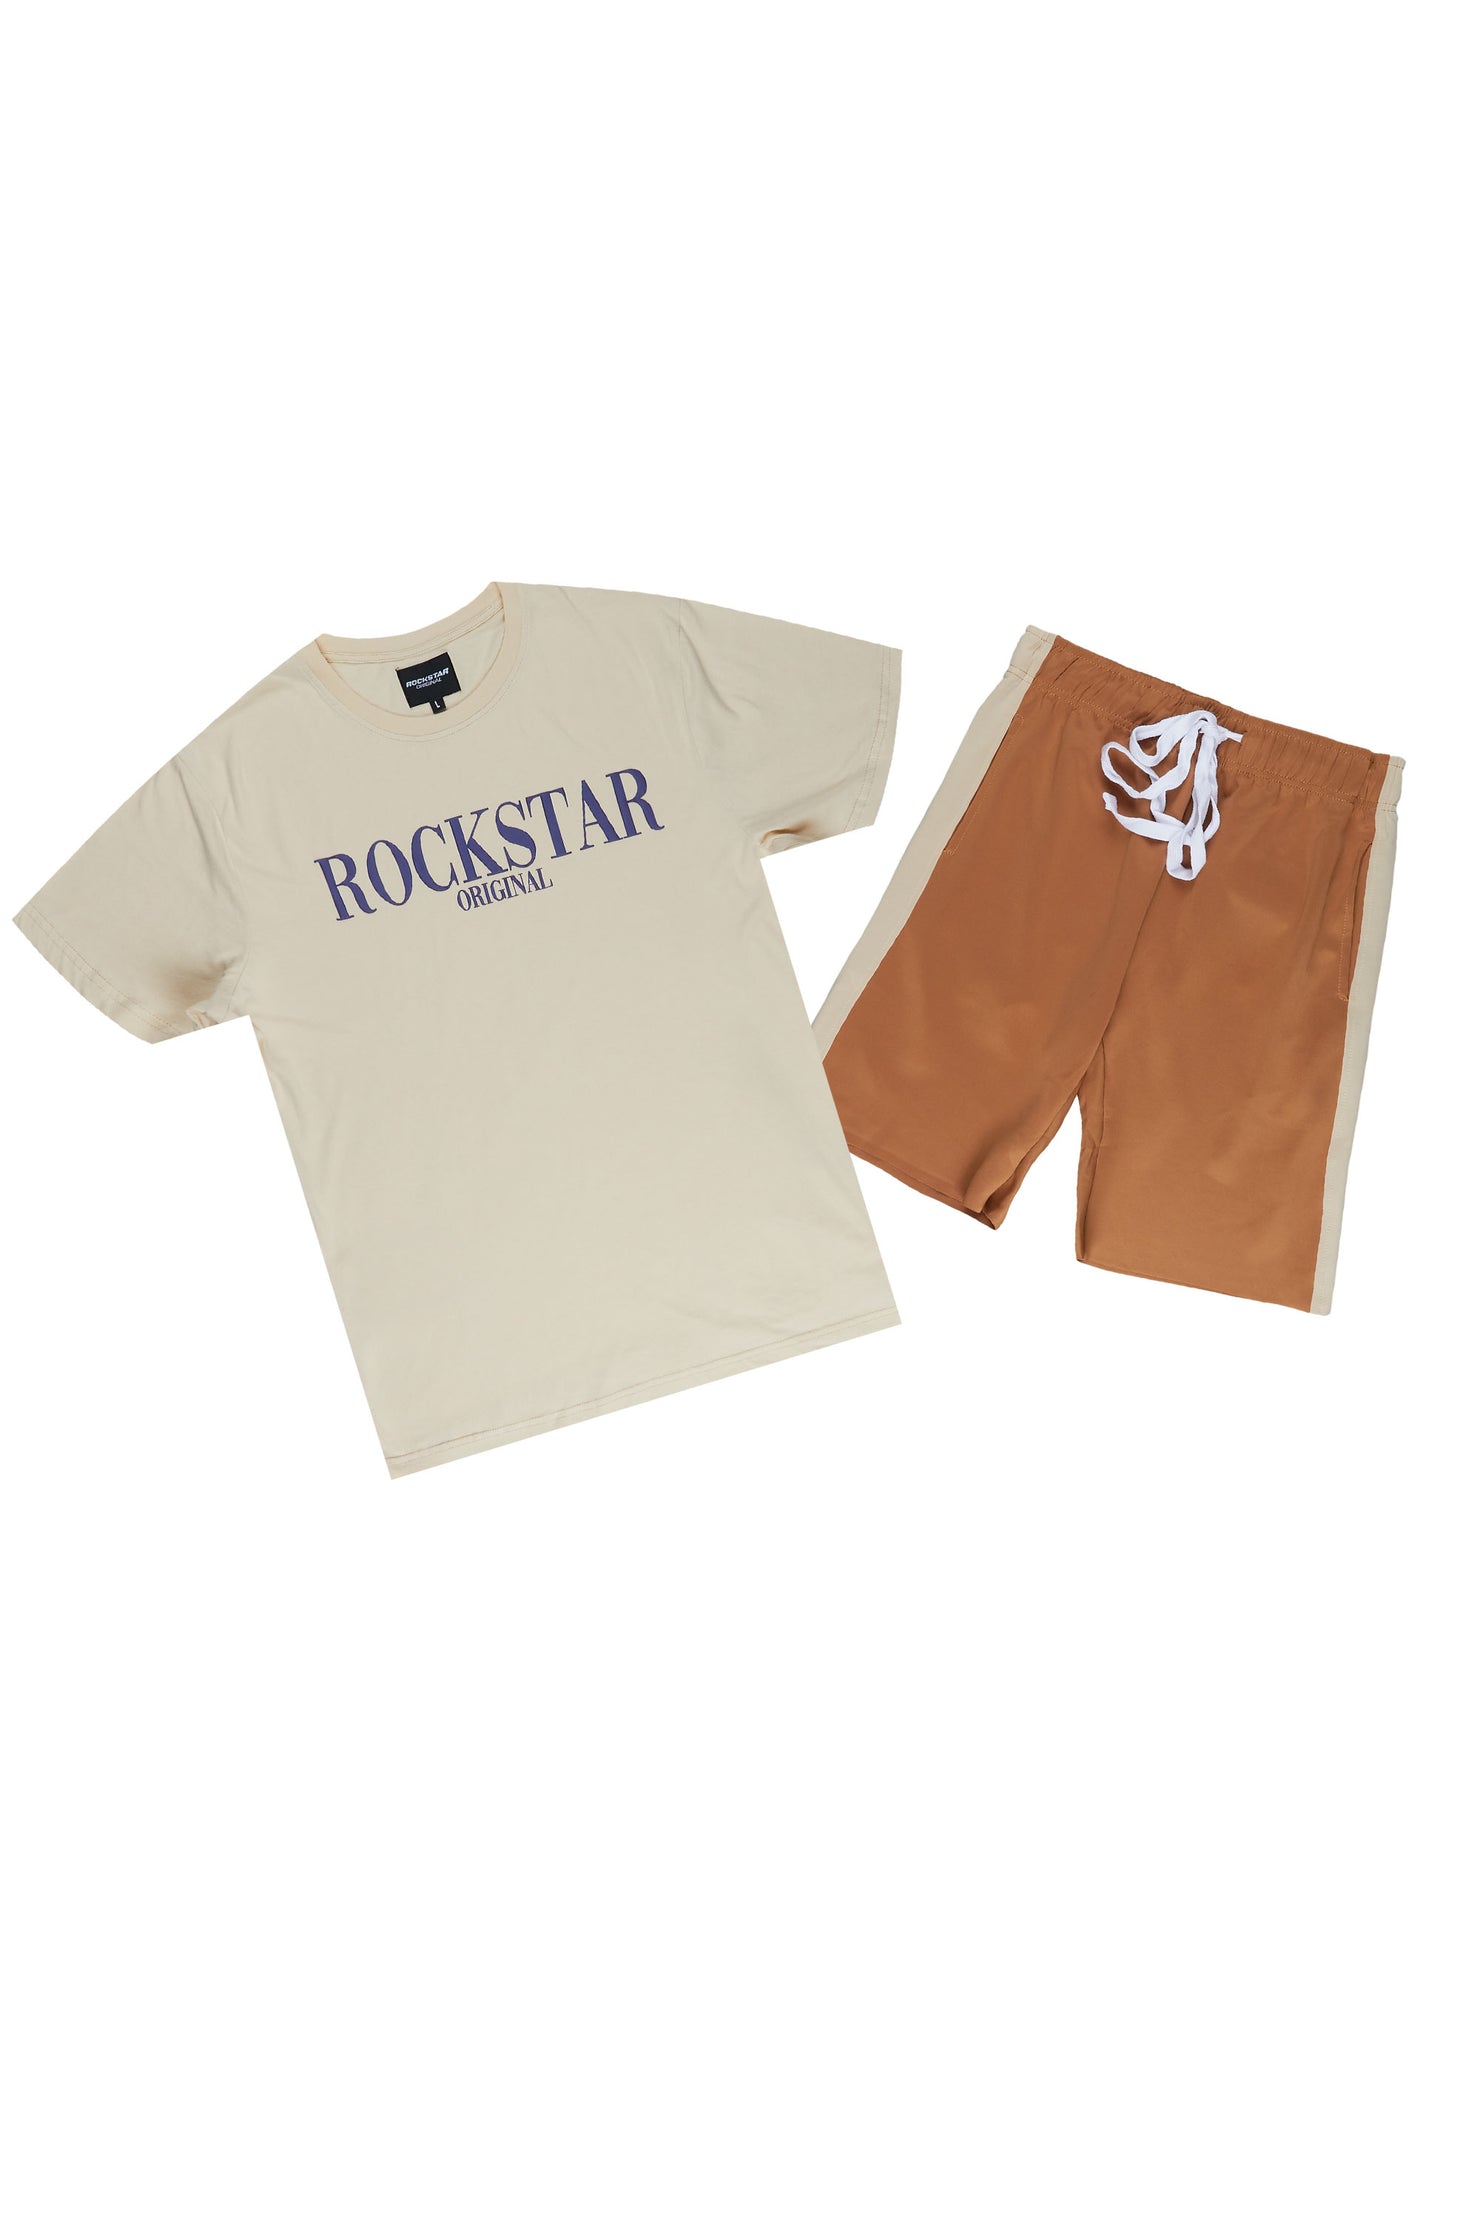 Octavio Beige/Navy Basic T-Shirt Short Set